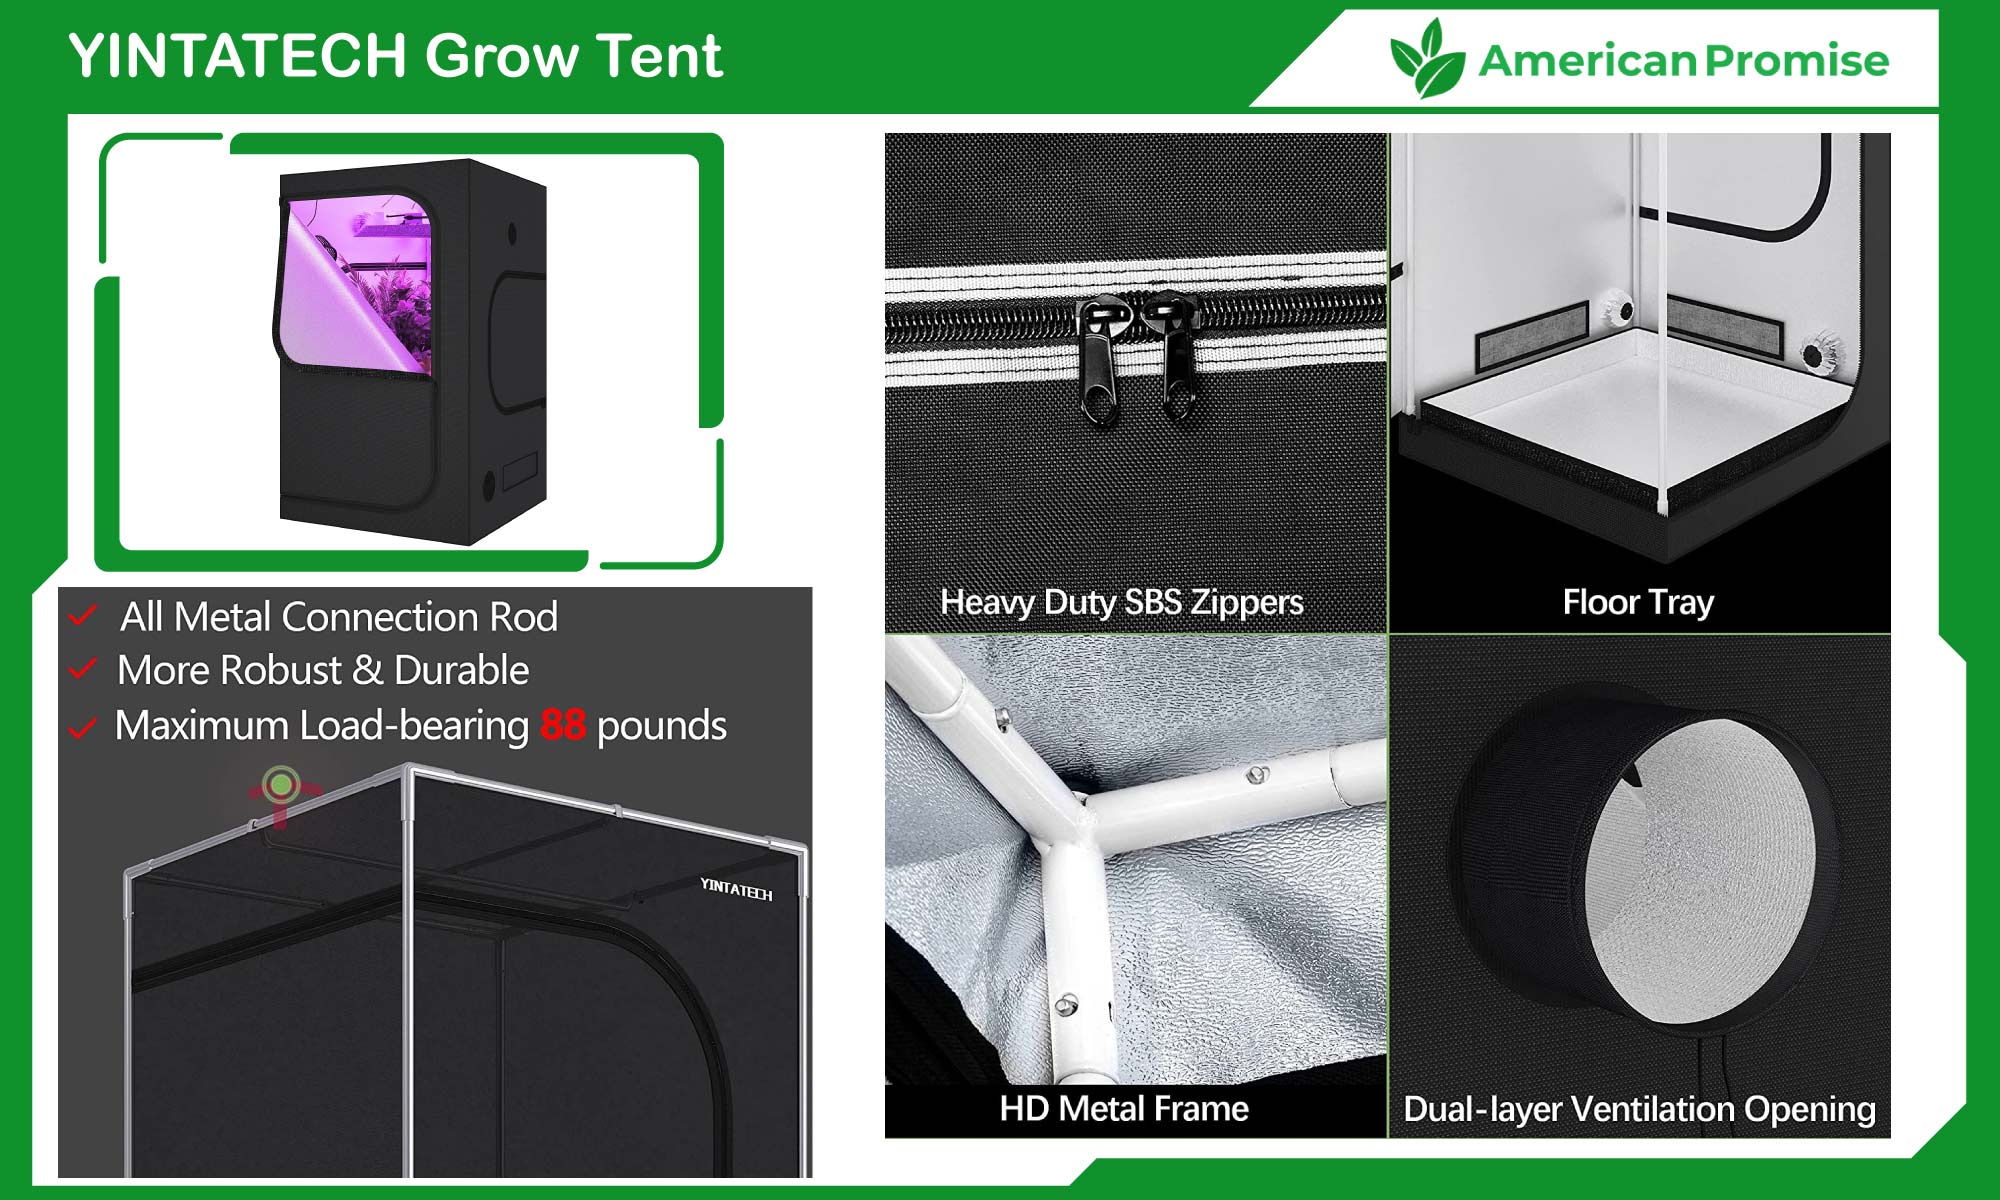 YINTATECH Grow Tent